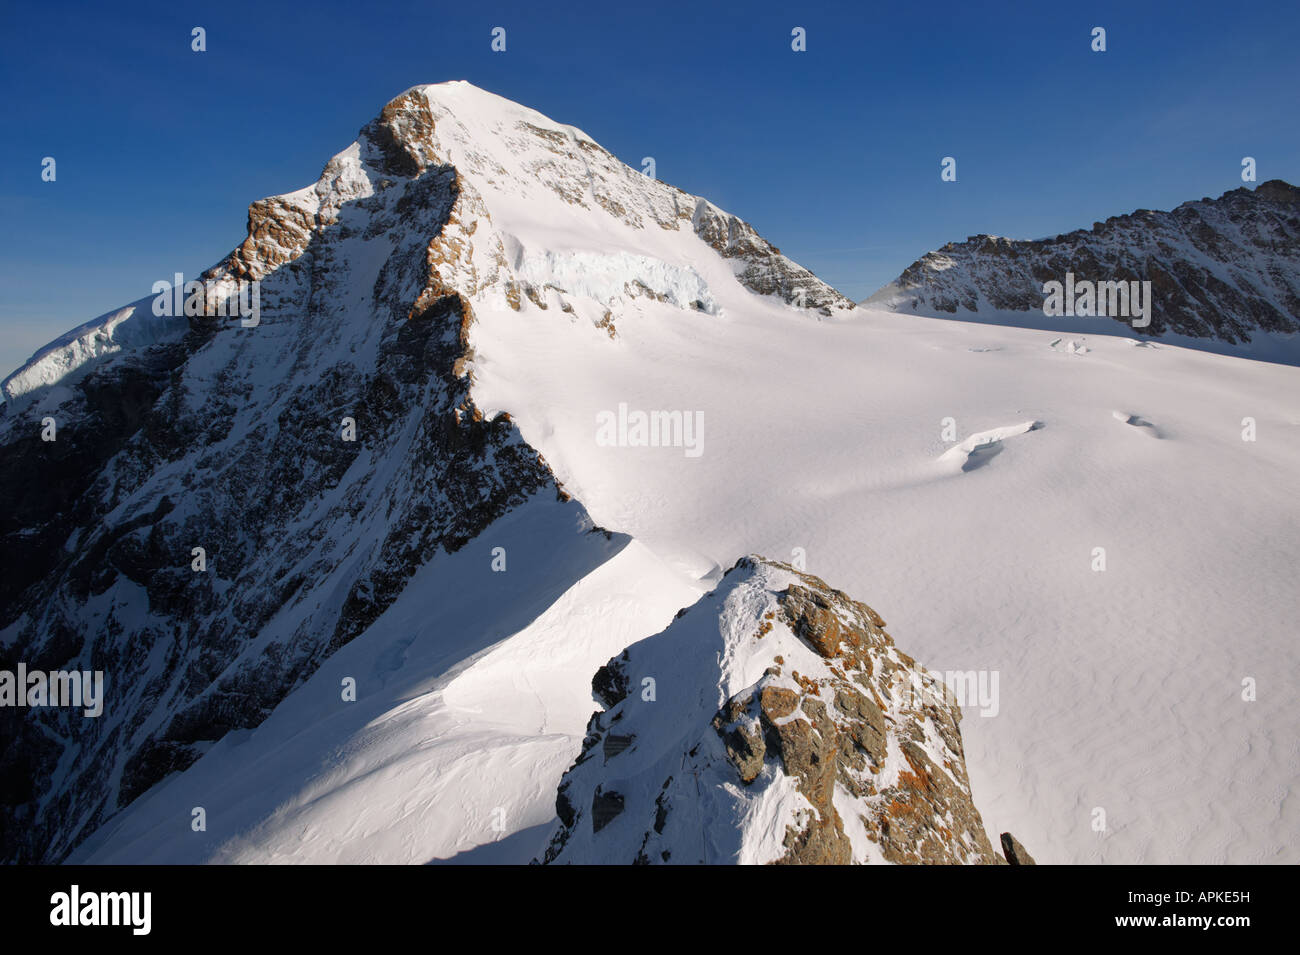 Monch peak from the Jungrfrau Top of Europe observatory, Swiss Alps, Switzerland. Stock Photo